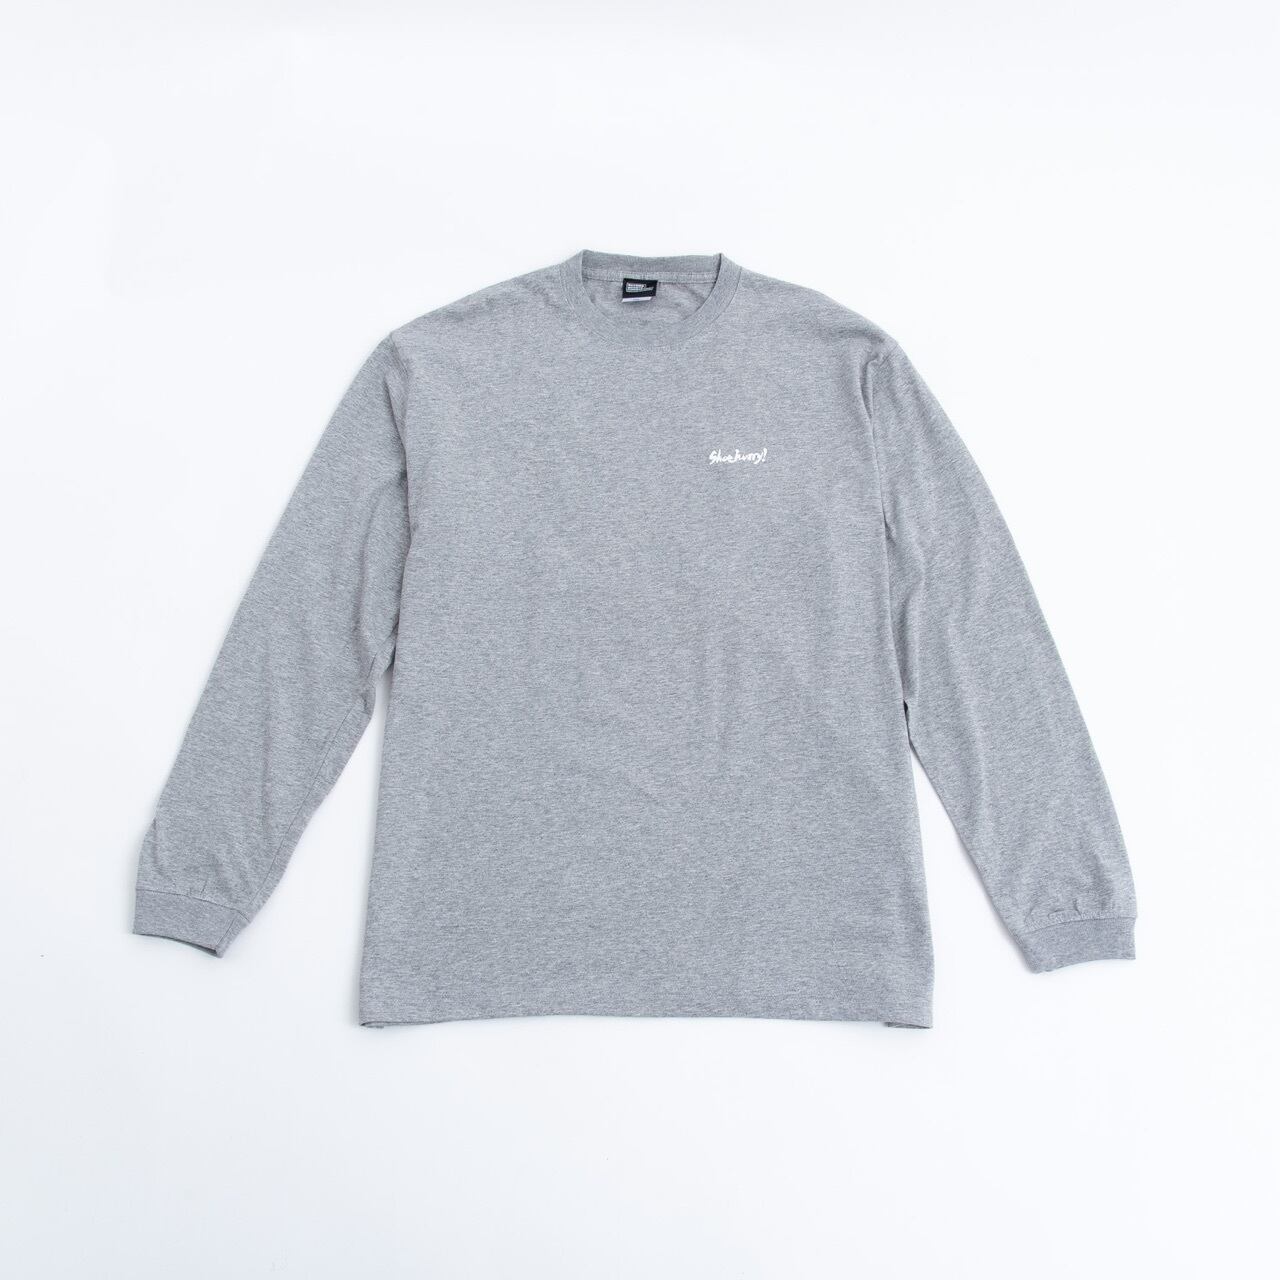 SHOEHURRY! SMALL LOGO COTTON LONG T-SHIRT(MIX GRAY/WHITE) | 綿素材長袖Tシャツ(ミックスグレー/ホワイト)